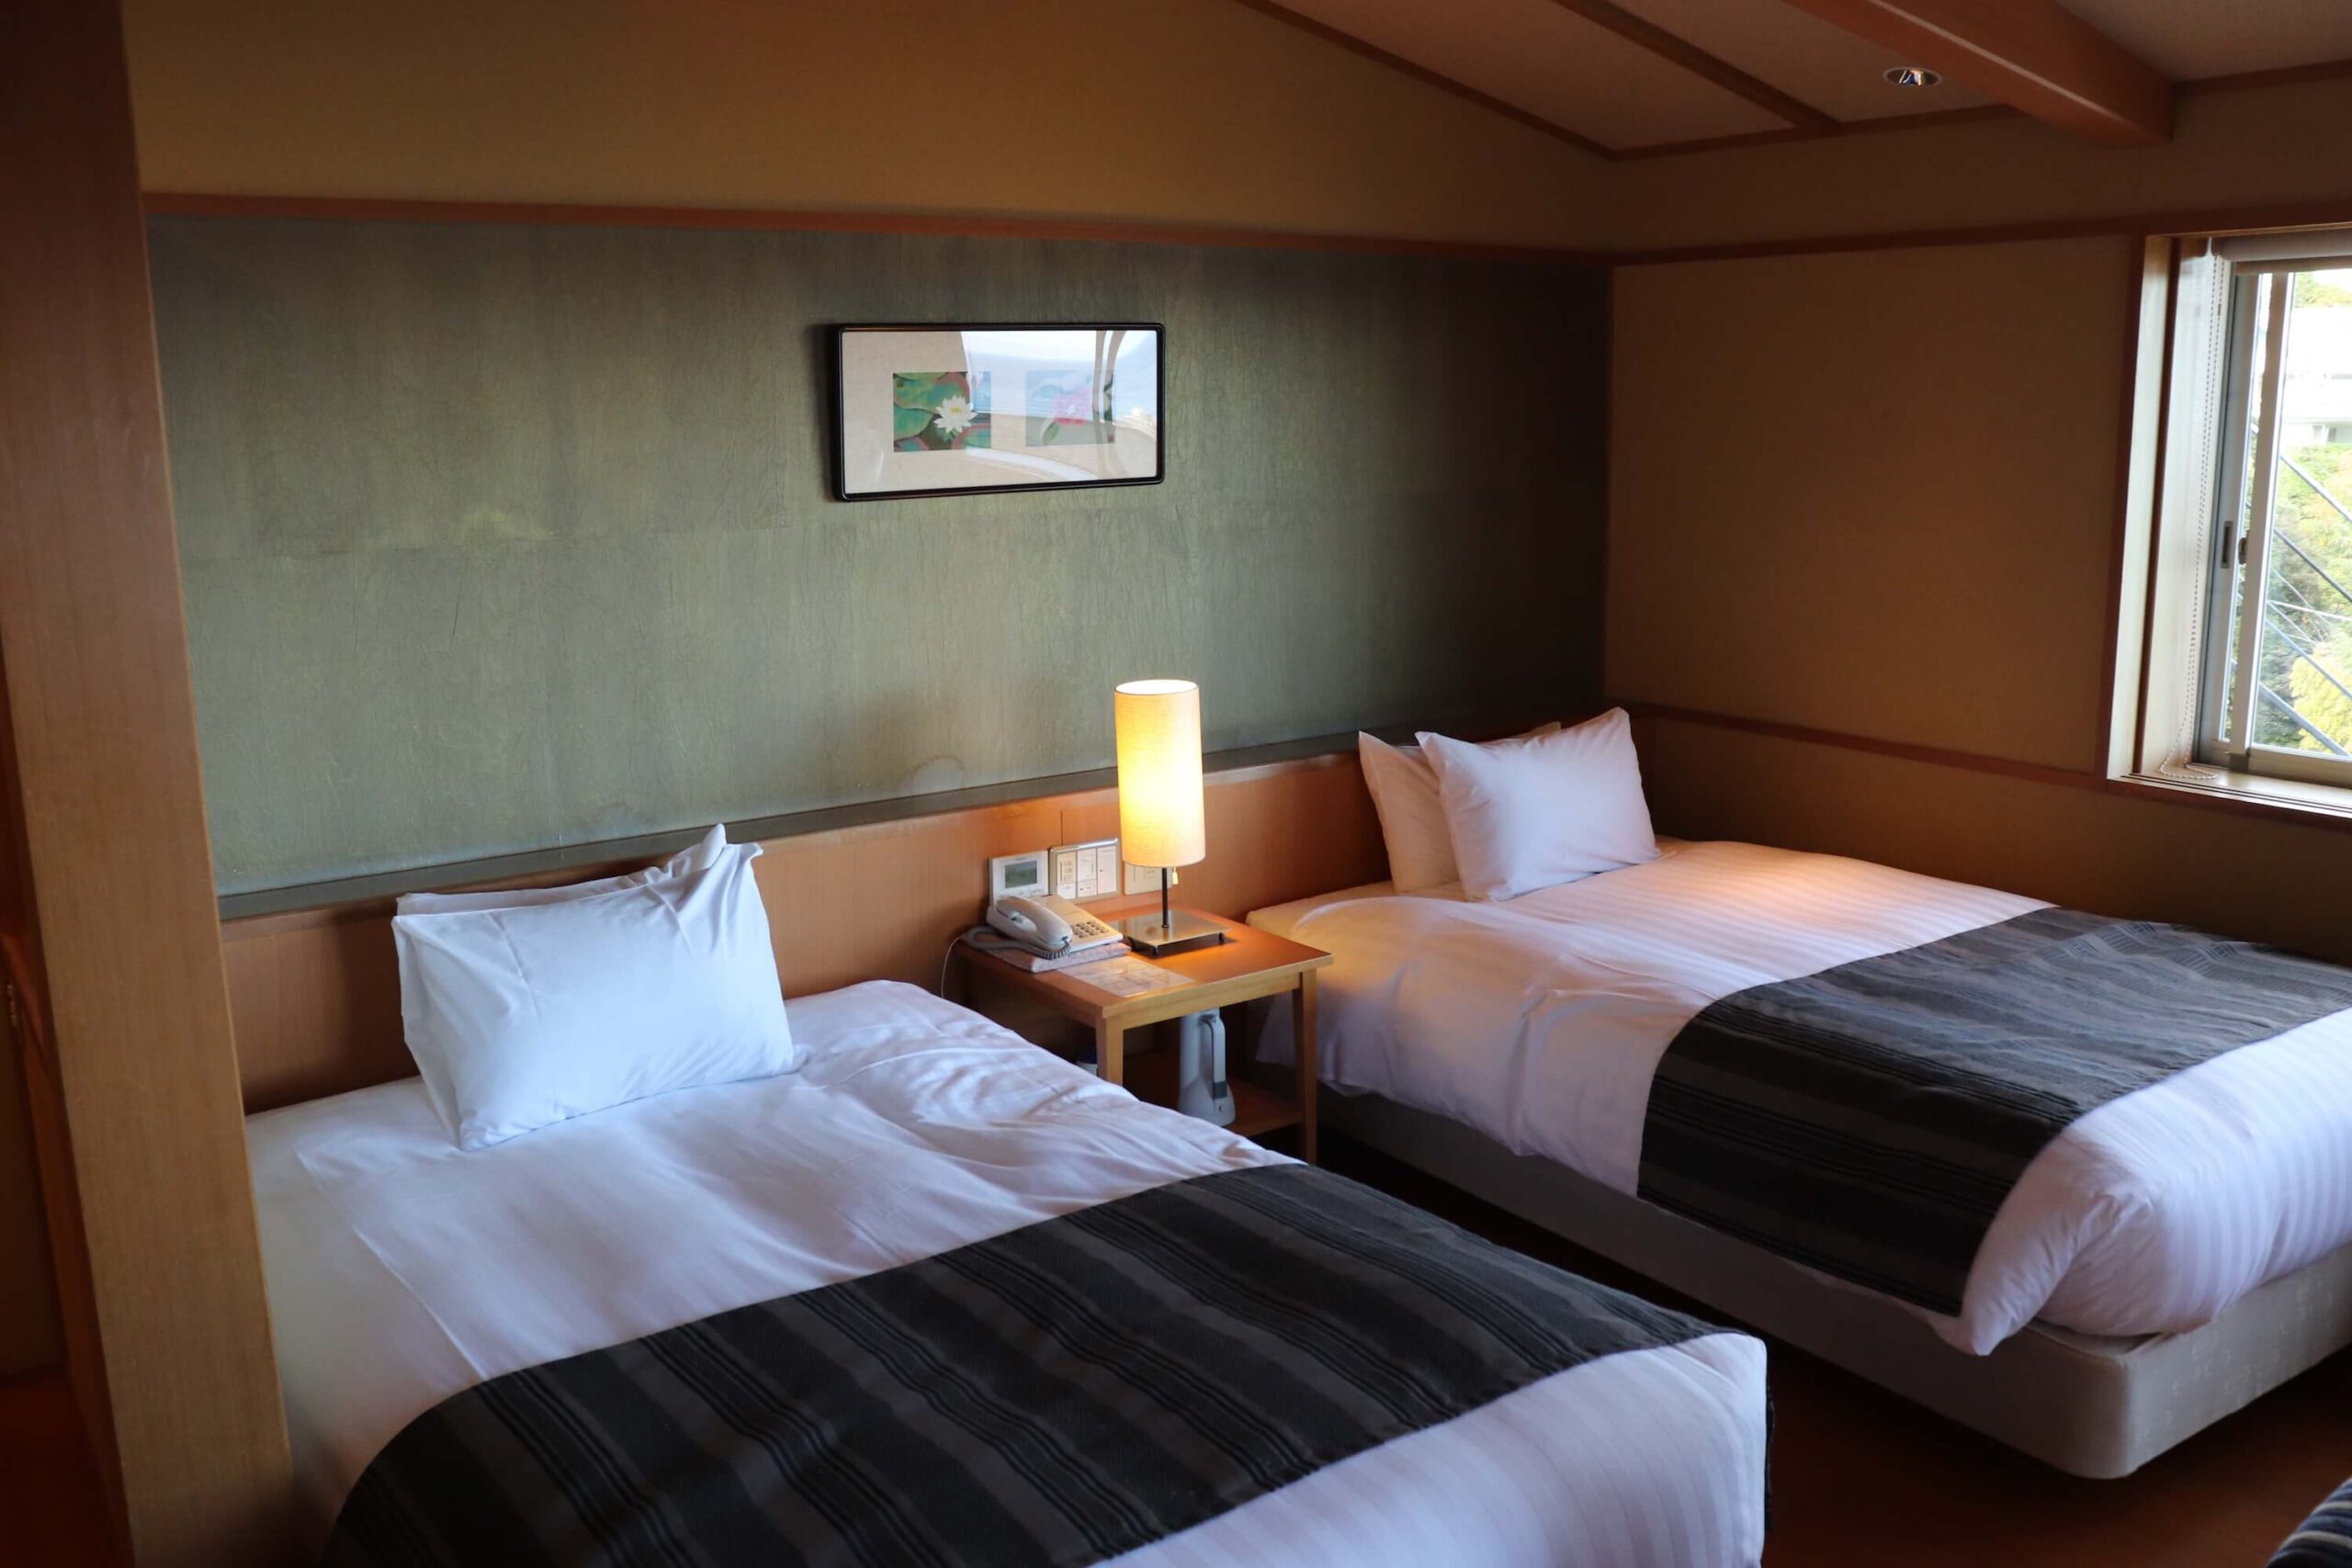 熱海の高級旅館 熱海大観荘の客室